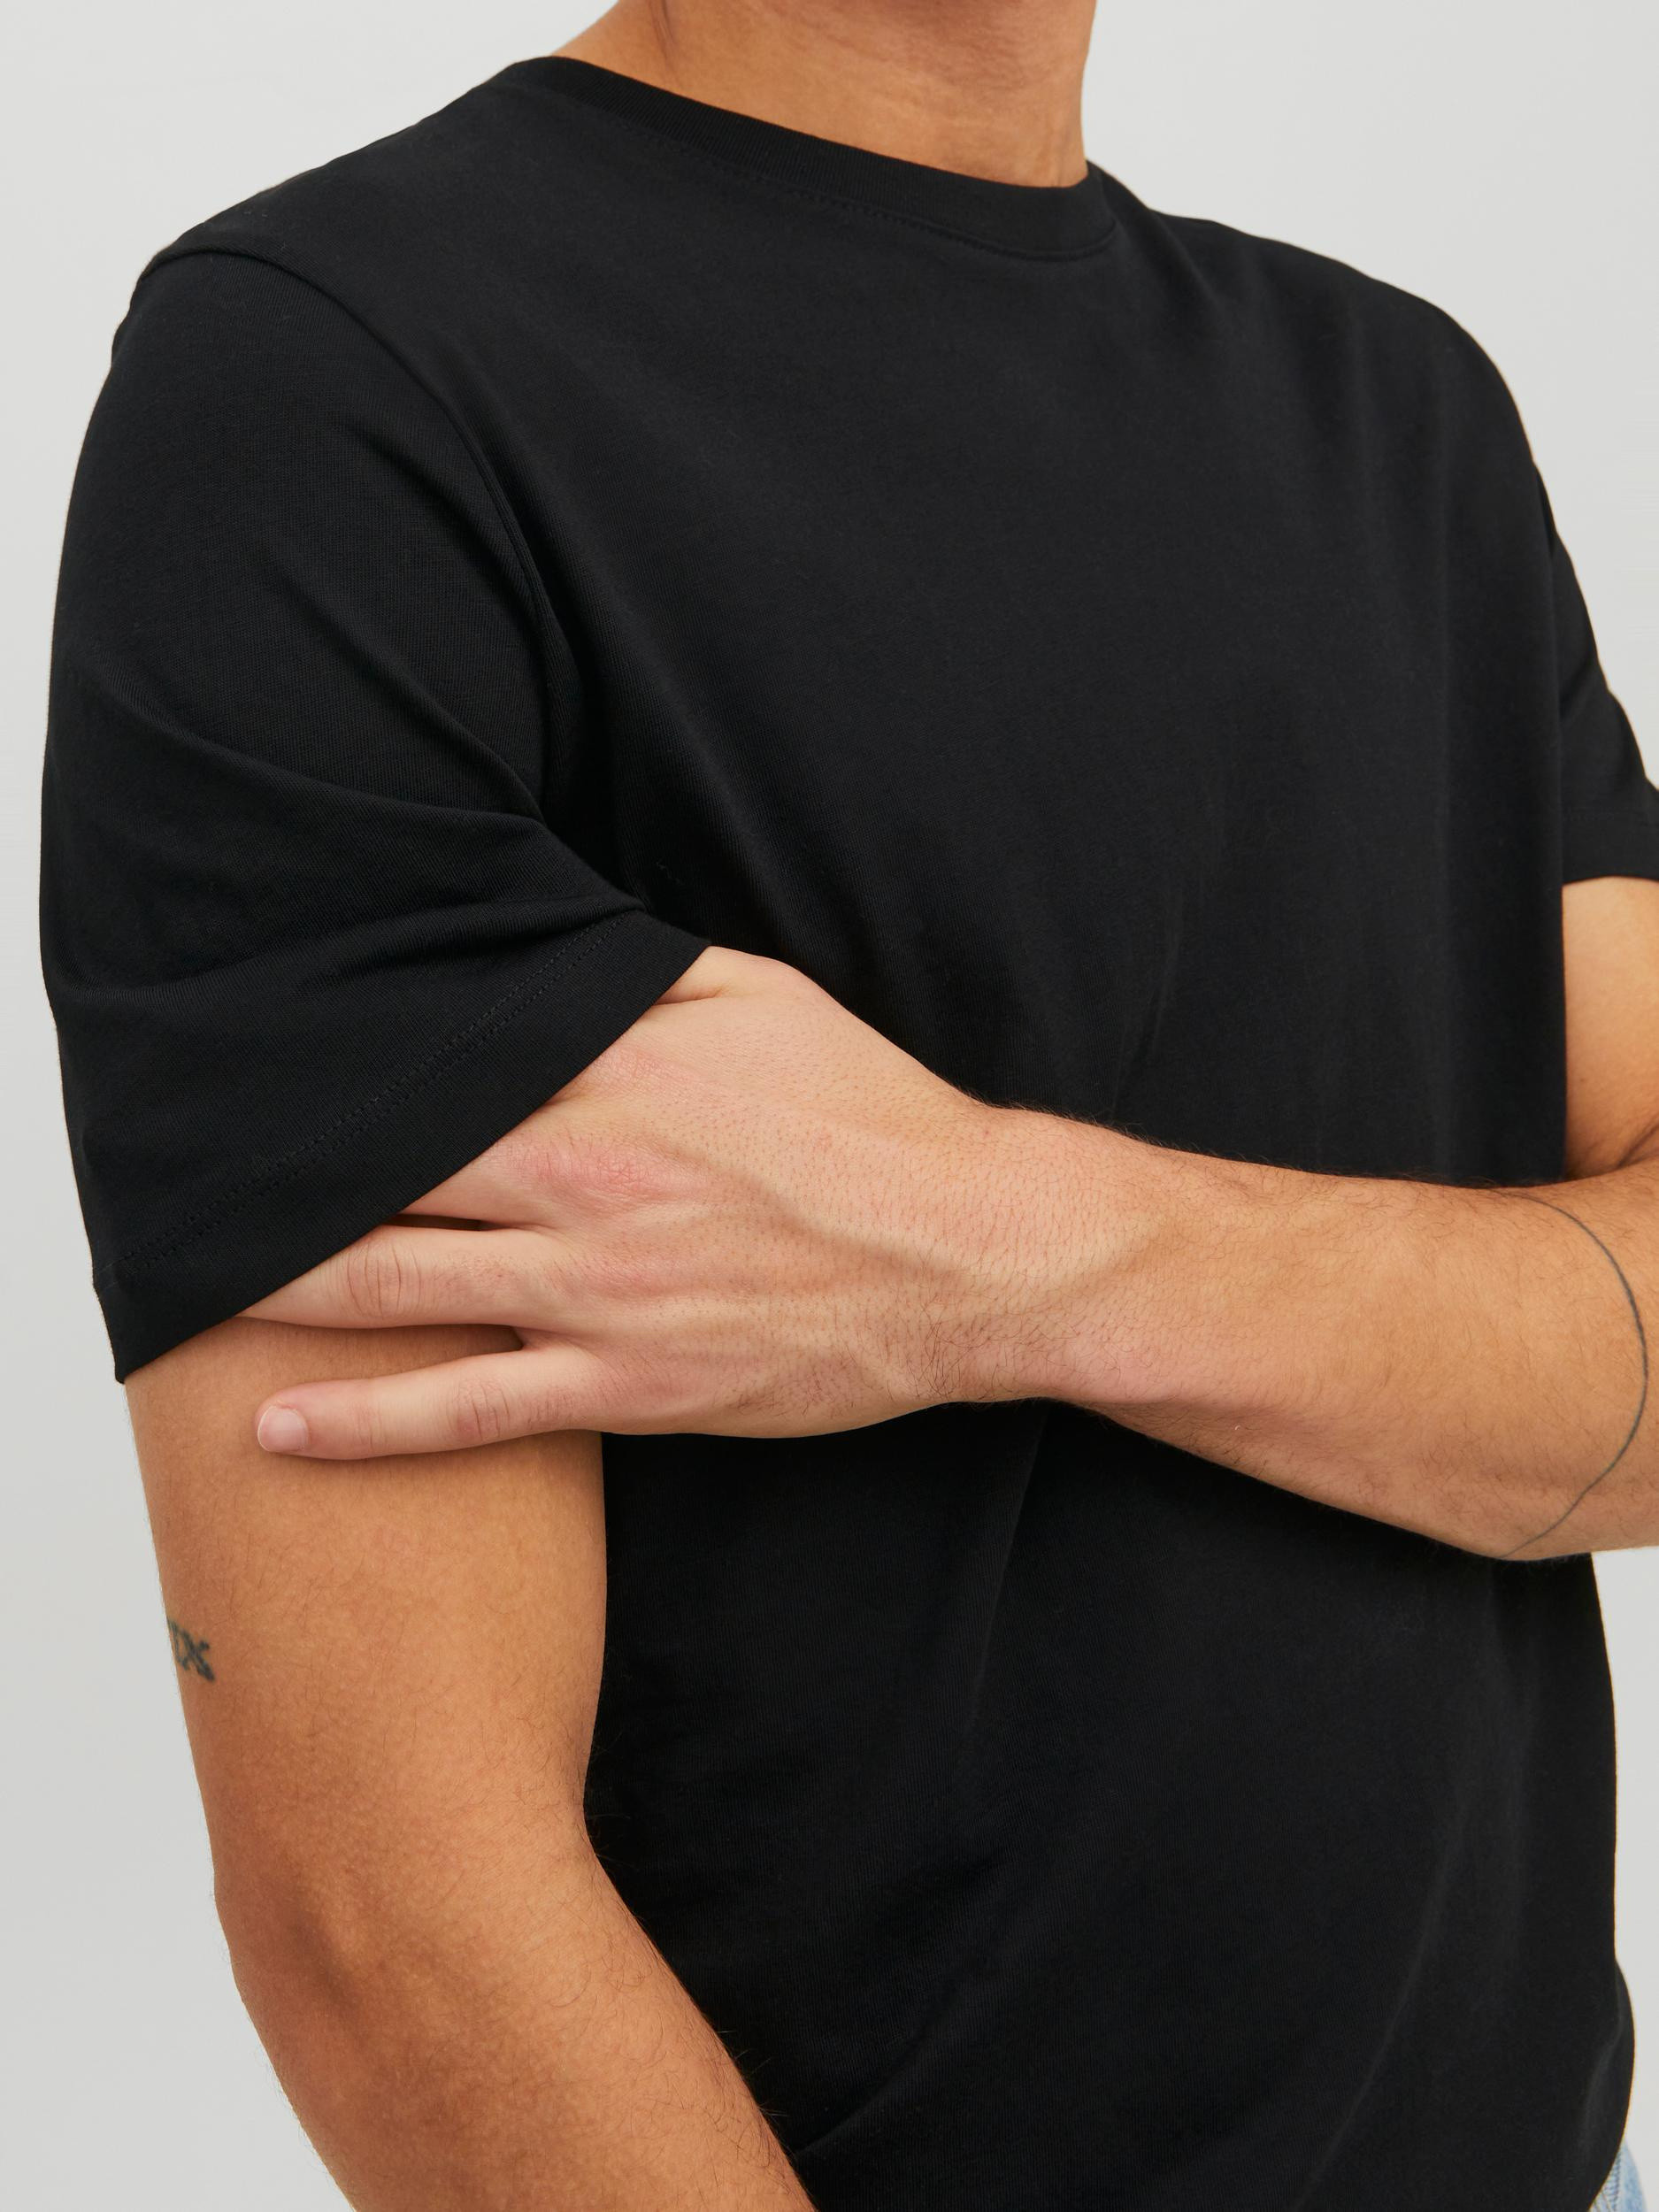 Jack & Jones - Cotton T-shirt, Black, large image number 6